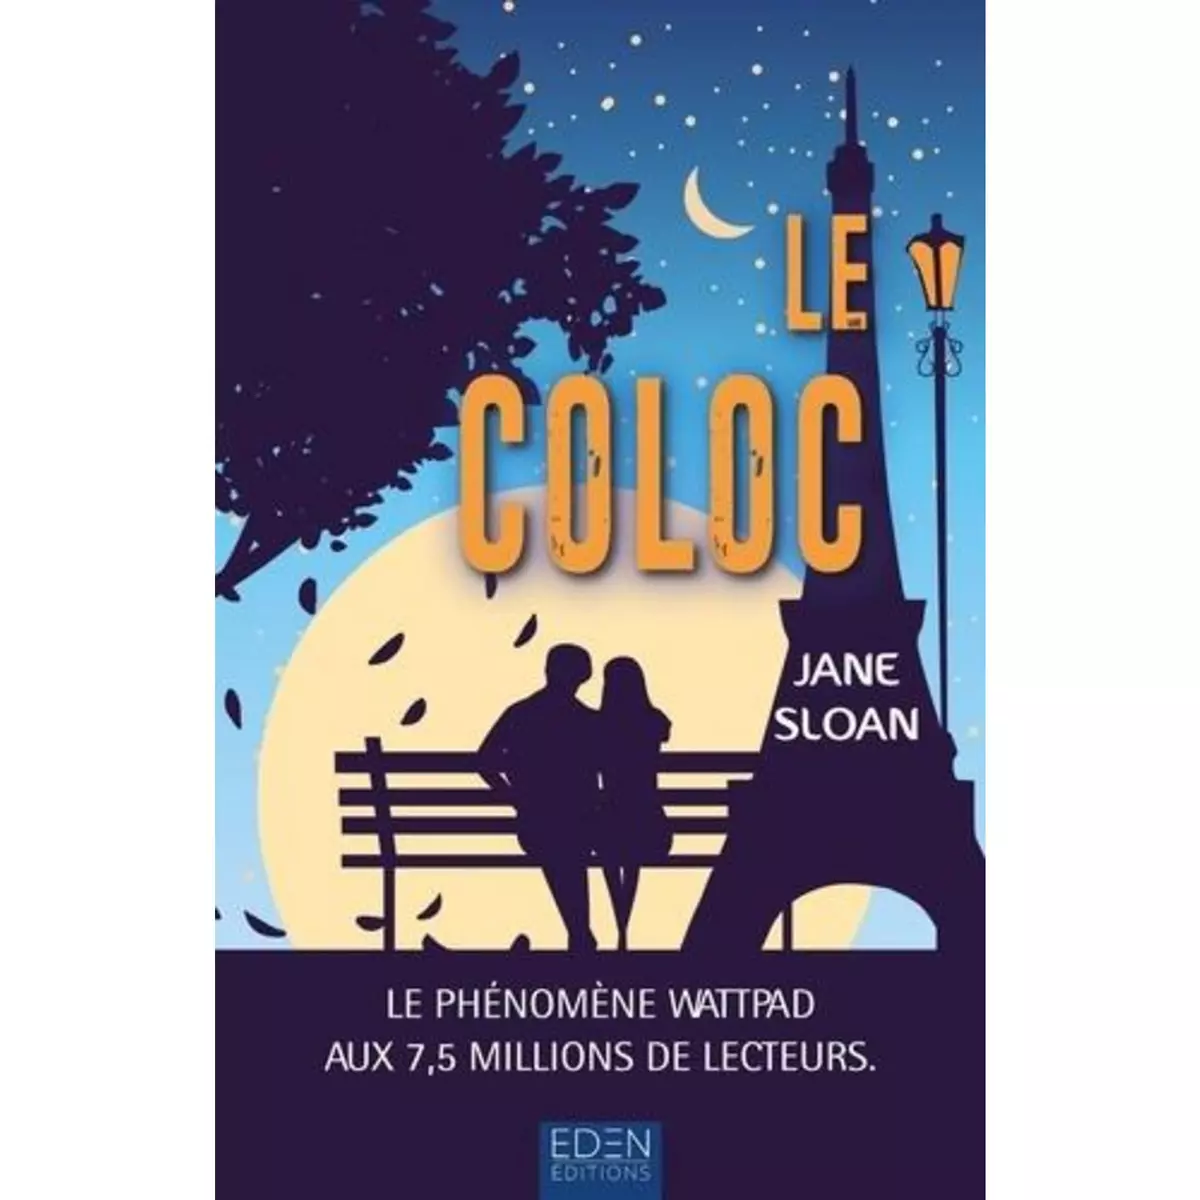  LE COLOC, Sloan Jane